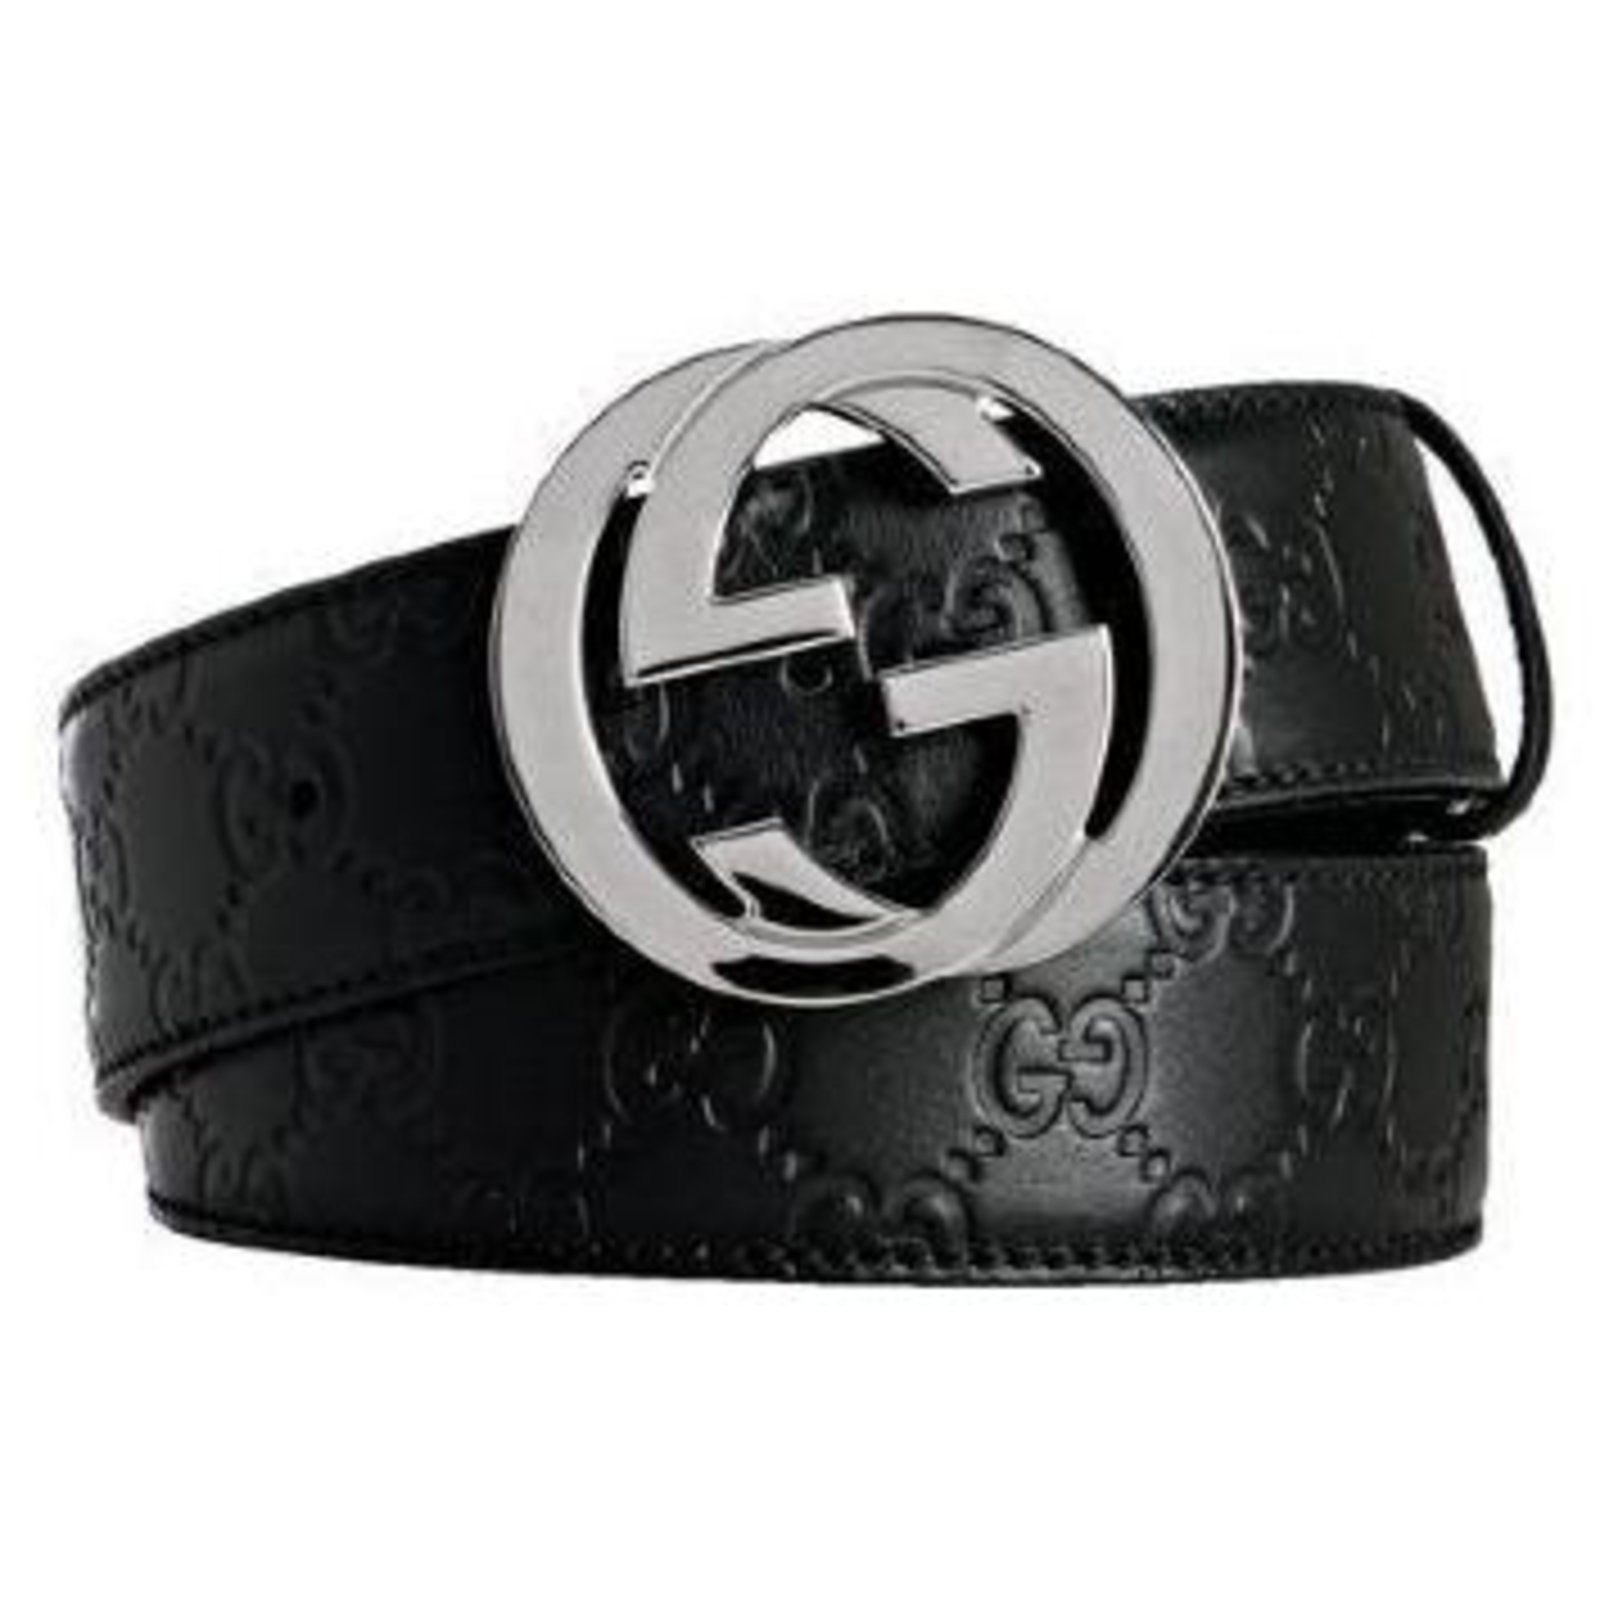 gucci belt black and grey